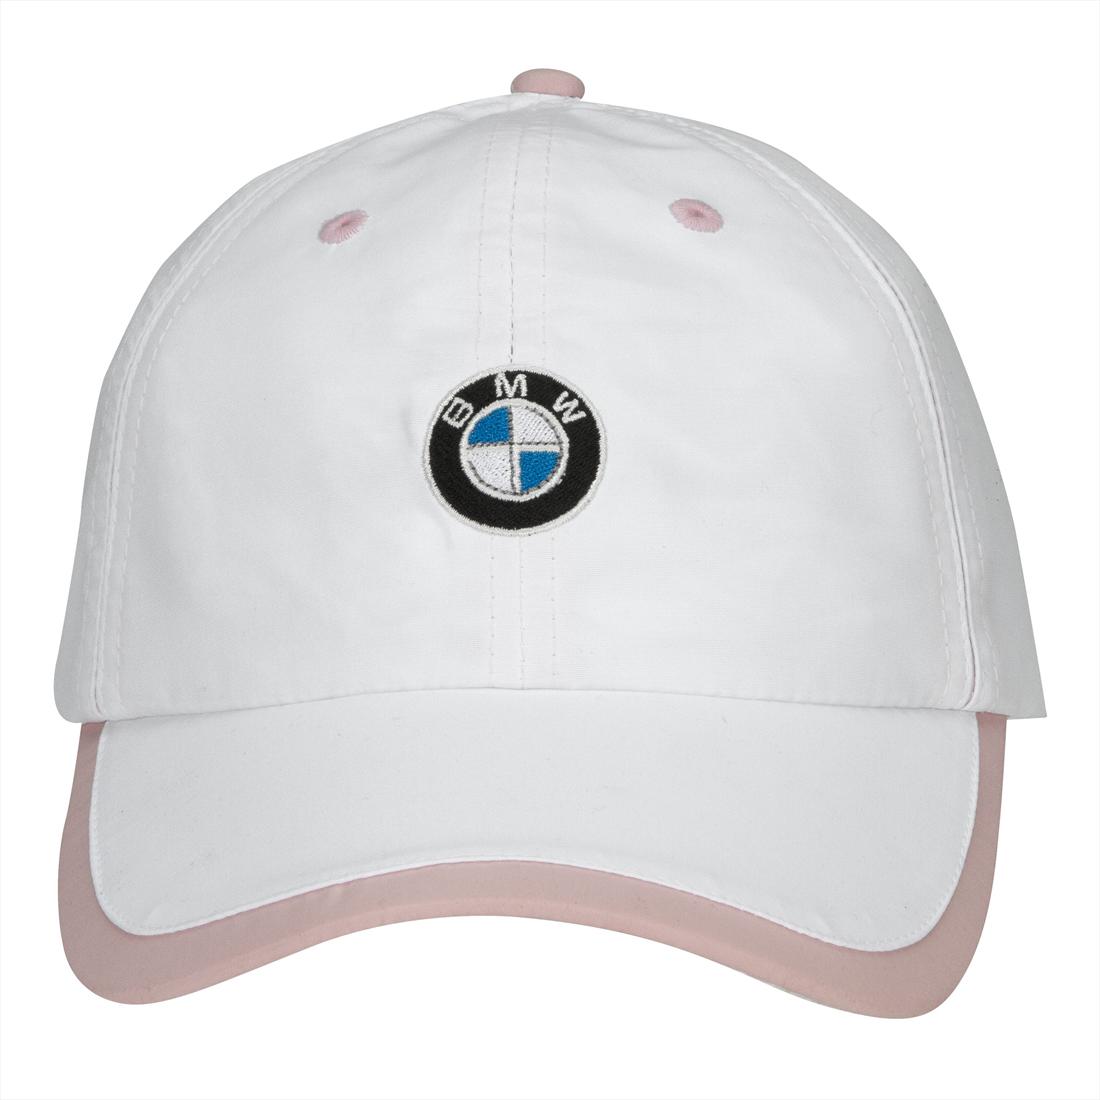 BMW Ladies' Microfiber Cap White/Pink